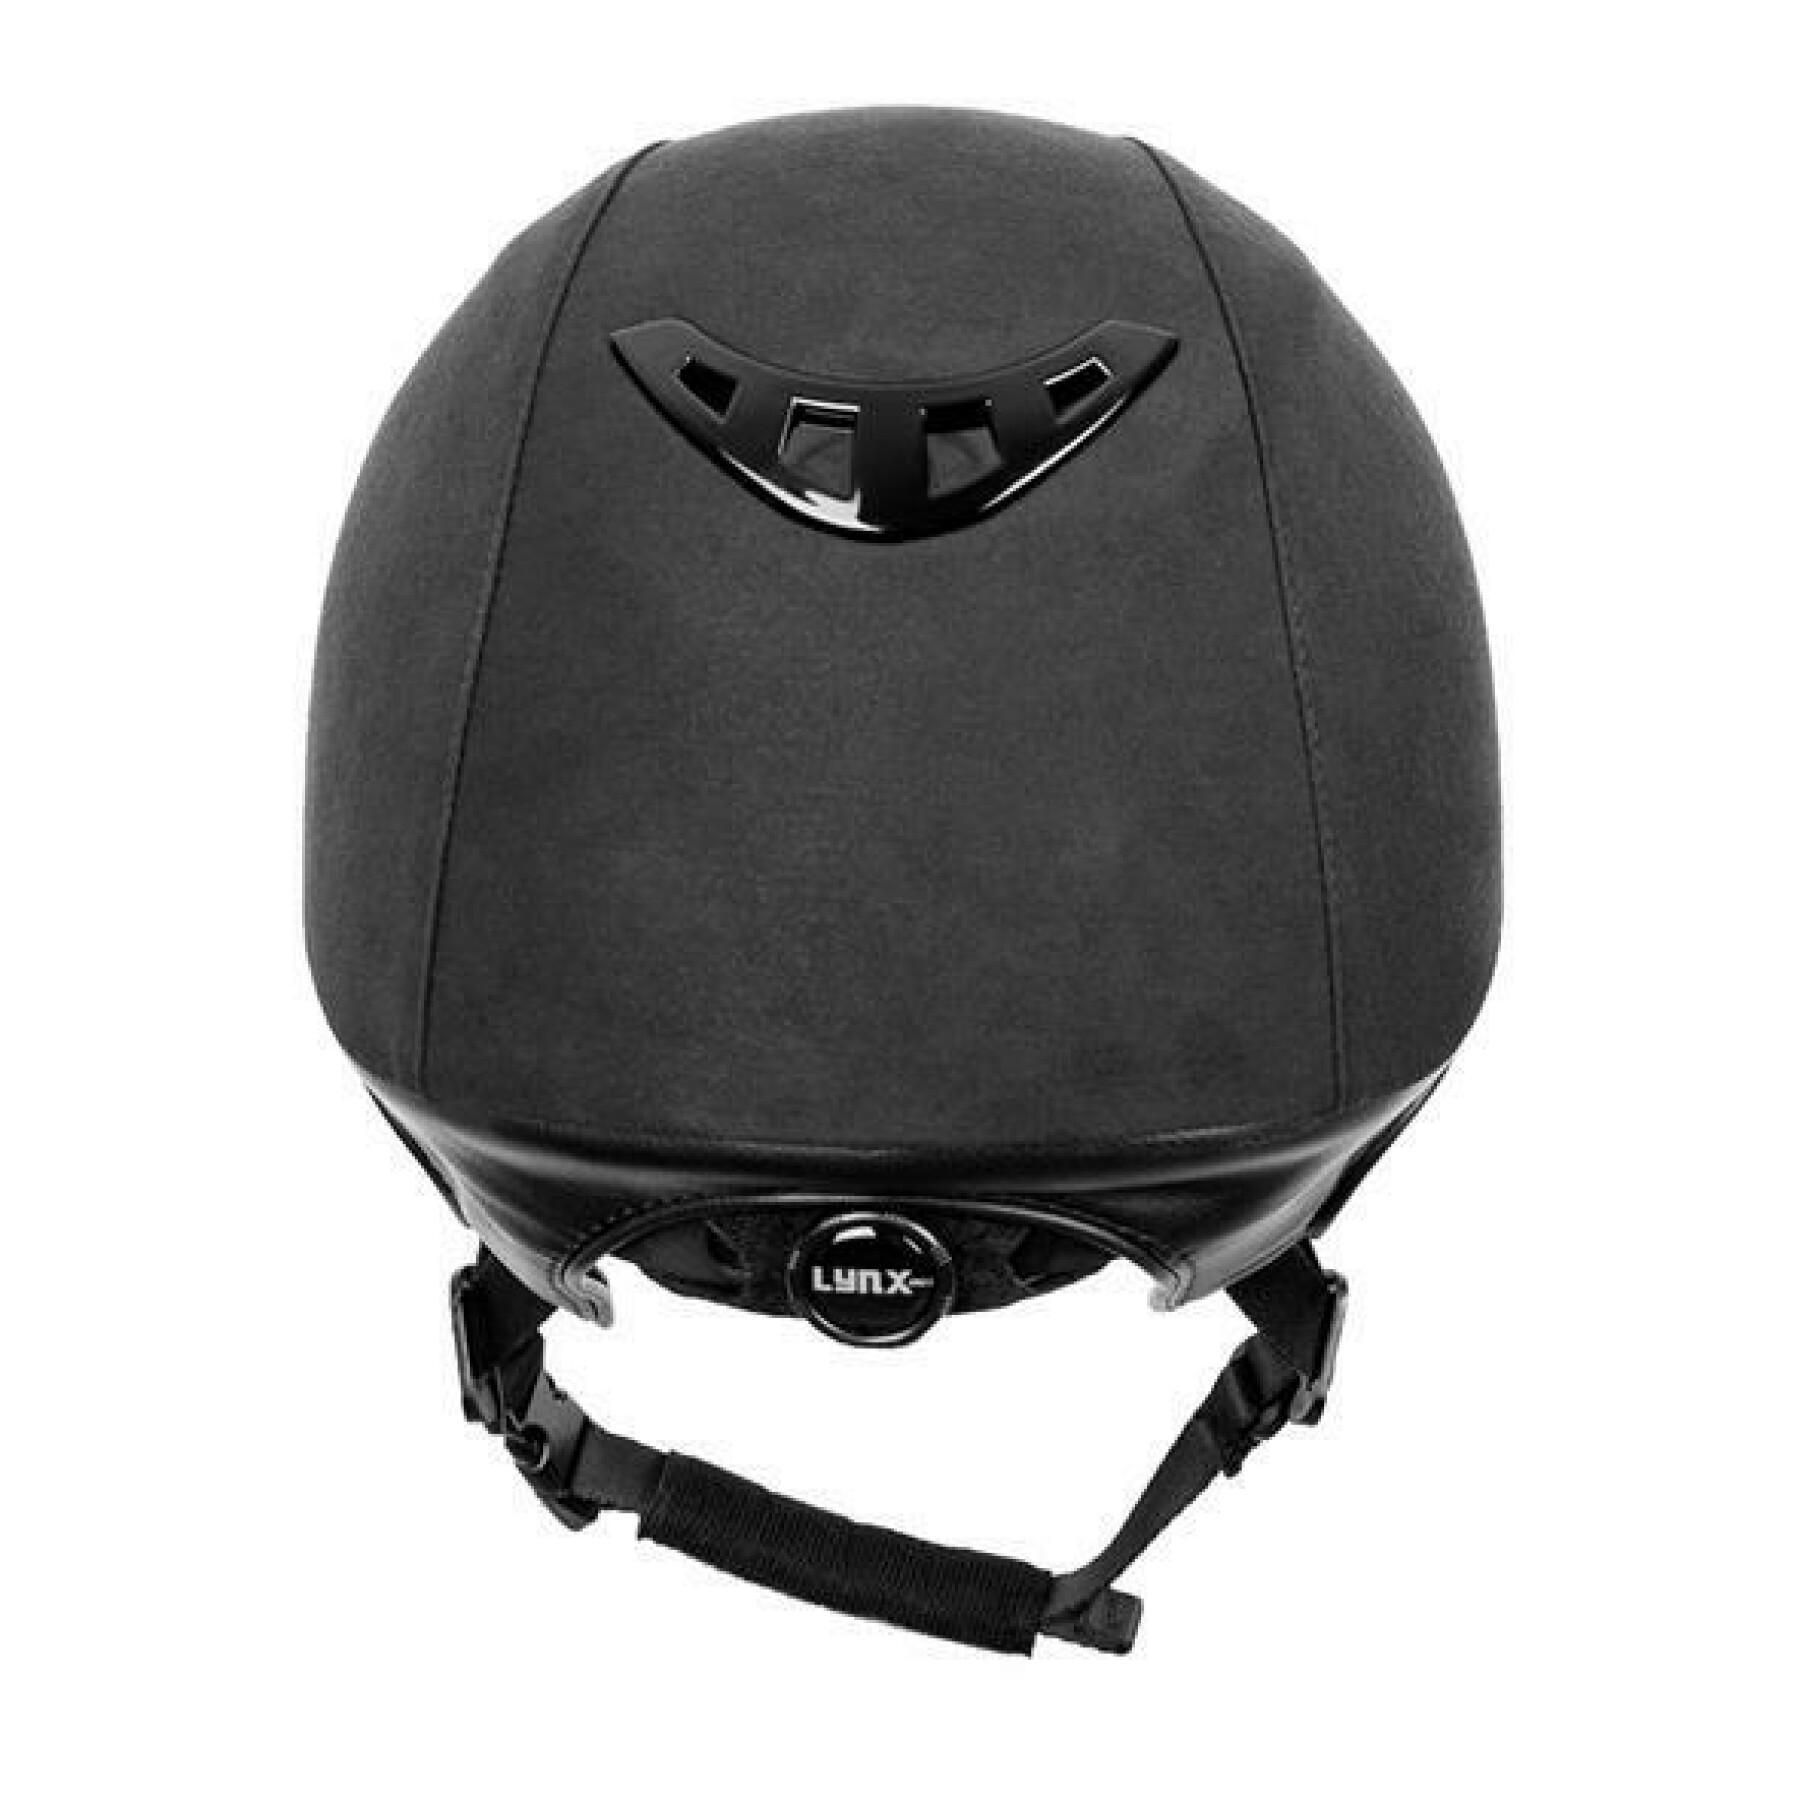 Microfiber helmet with new ventilation Back on Track EQ3 lynx